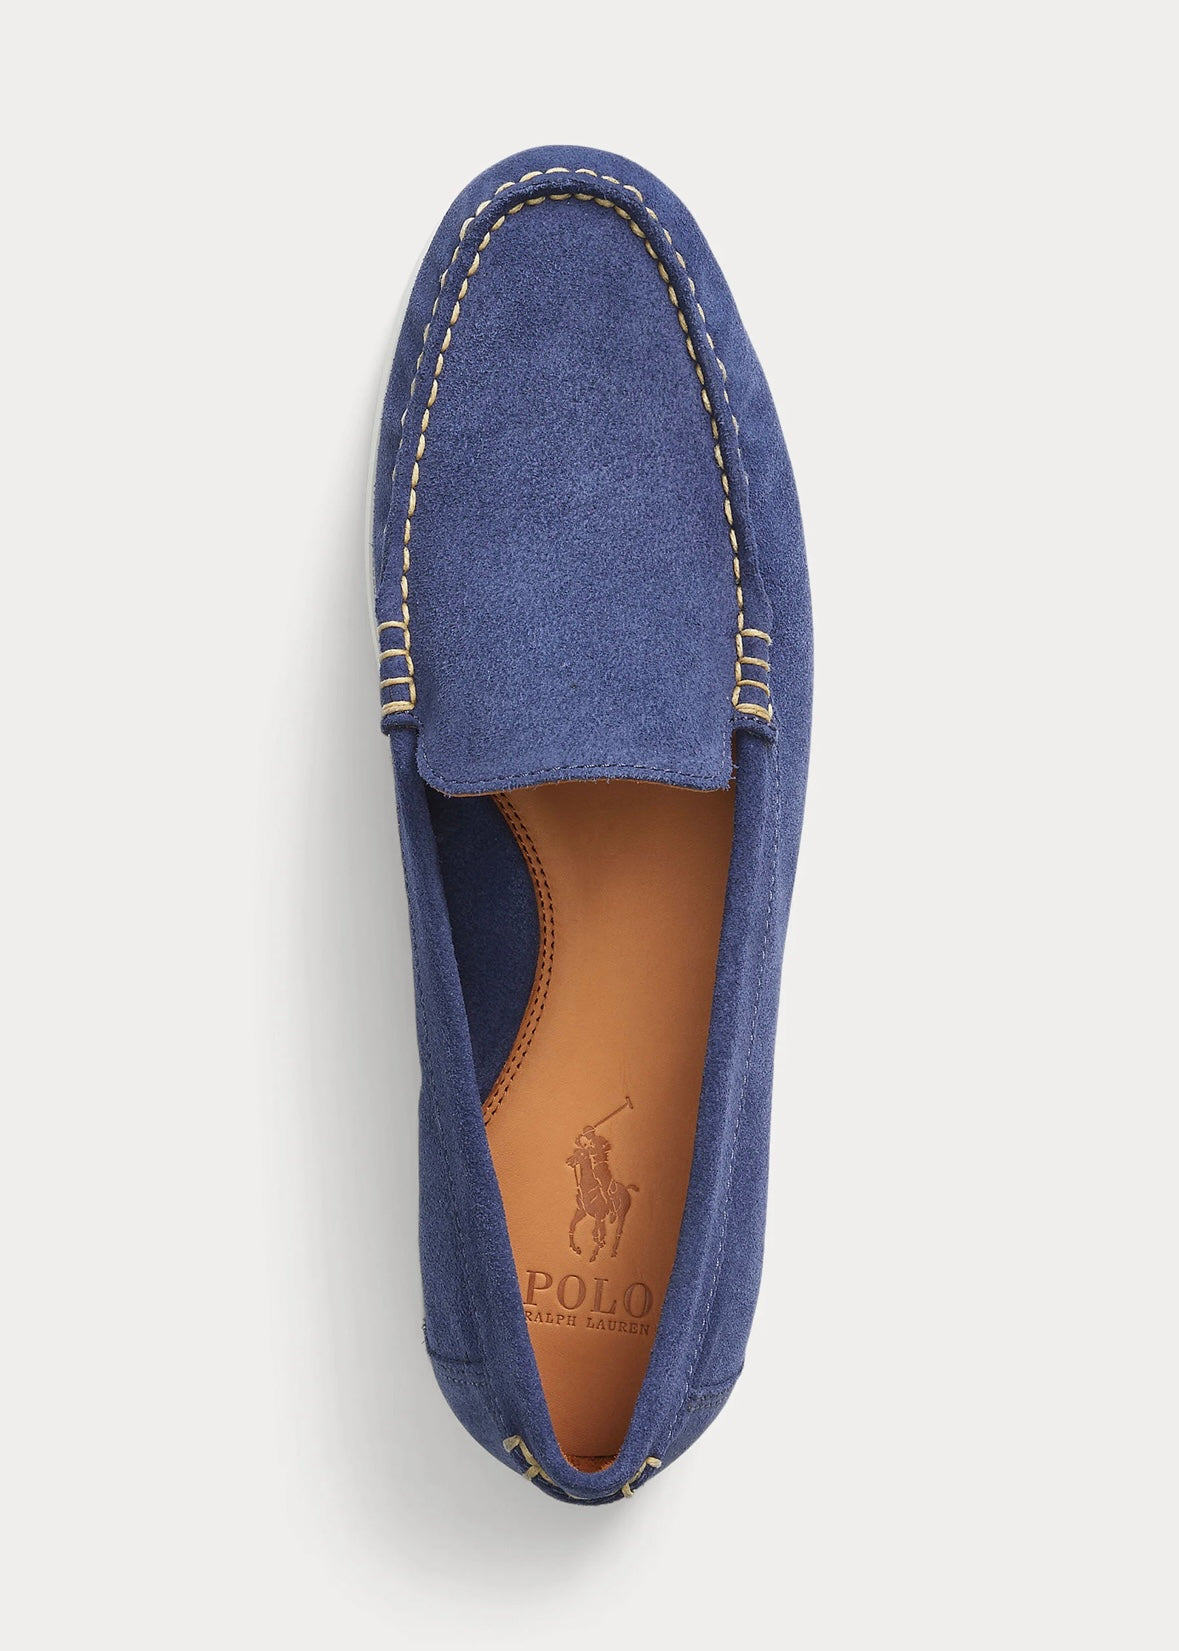 Polo Ralph Lauren loafers - Navy